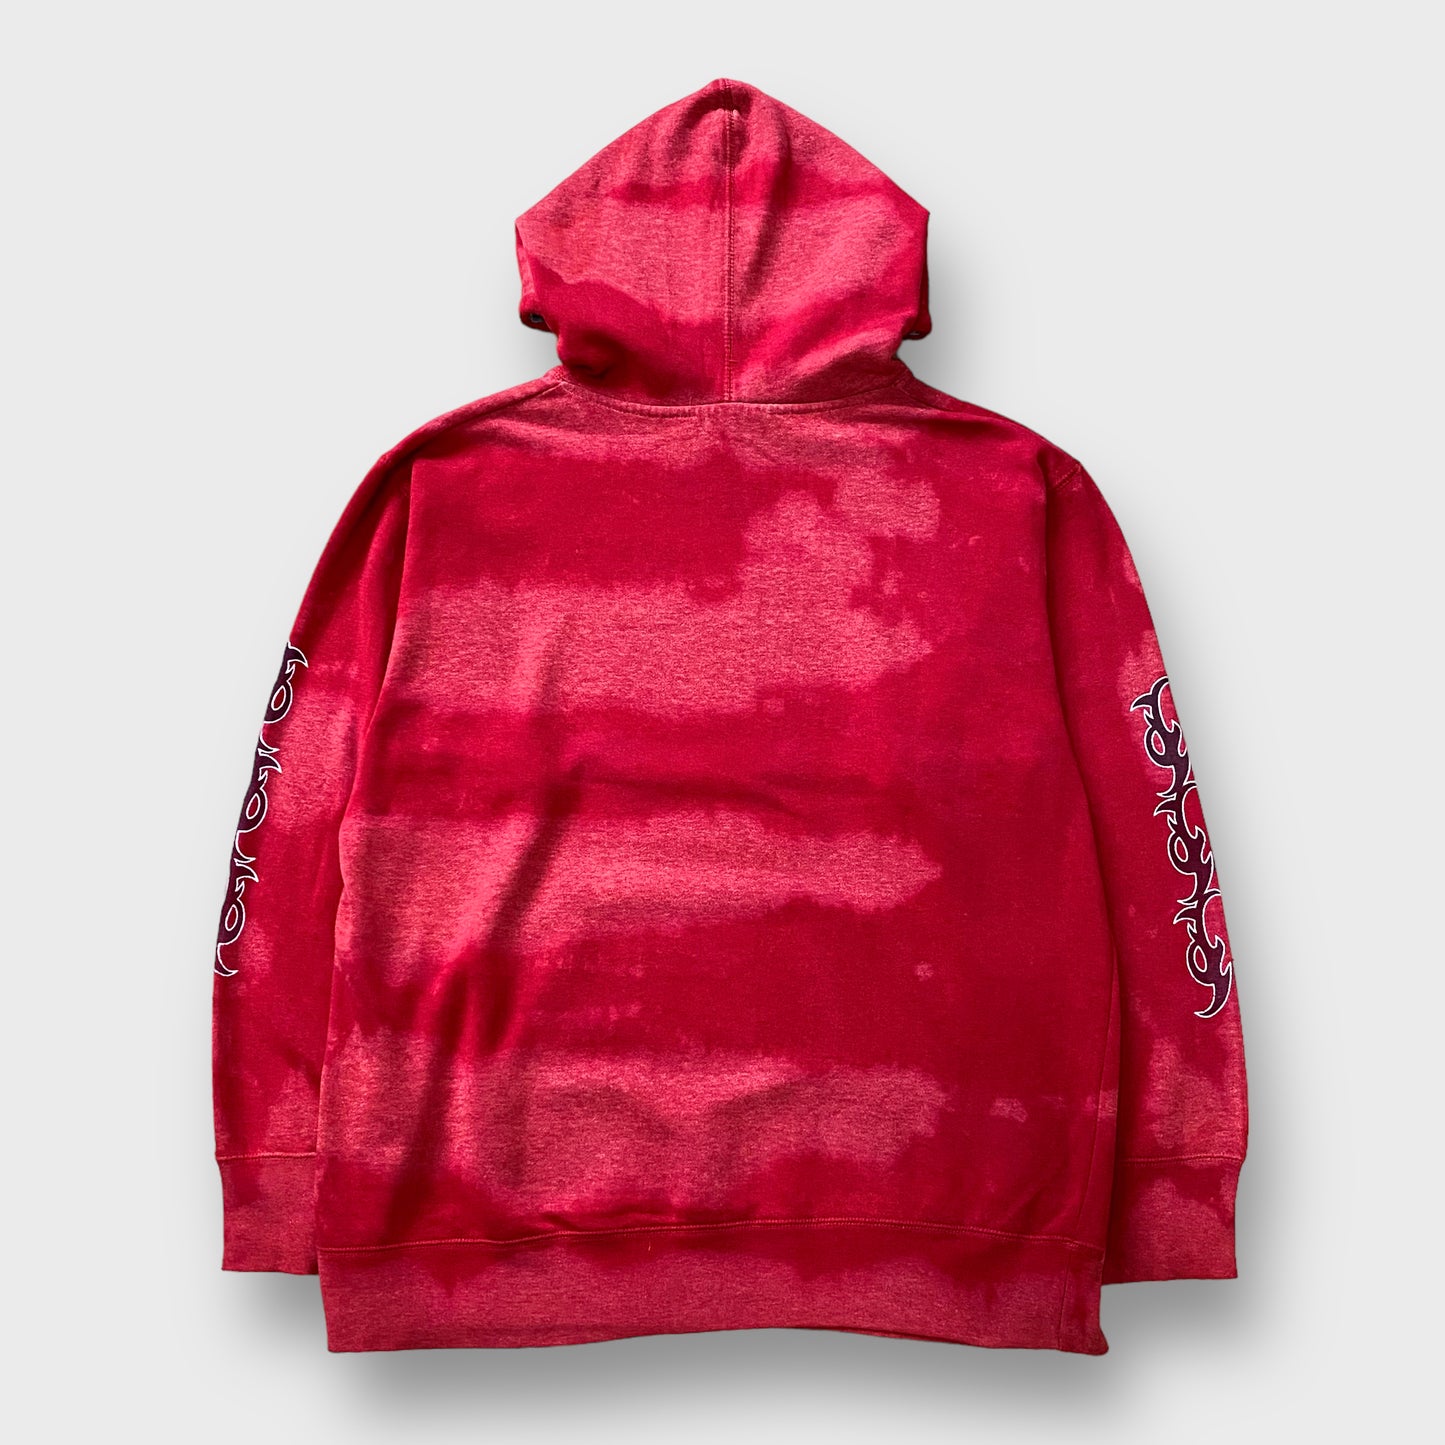 Bleach design hoodie